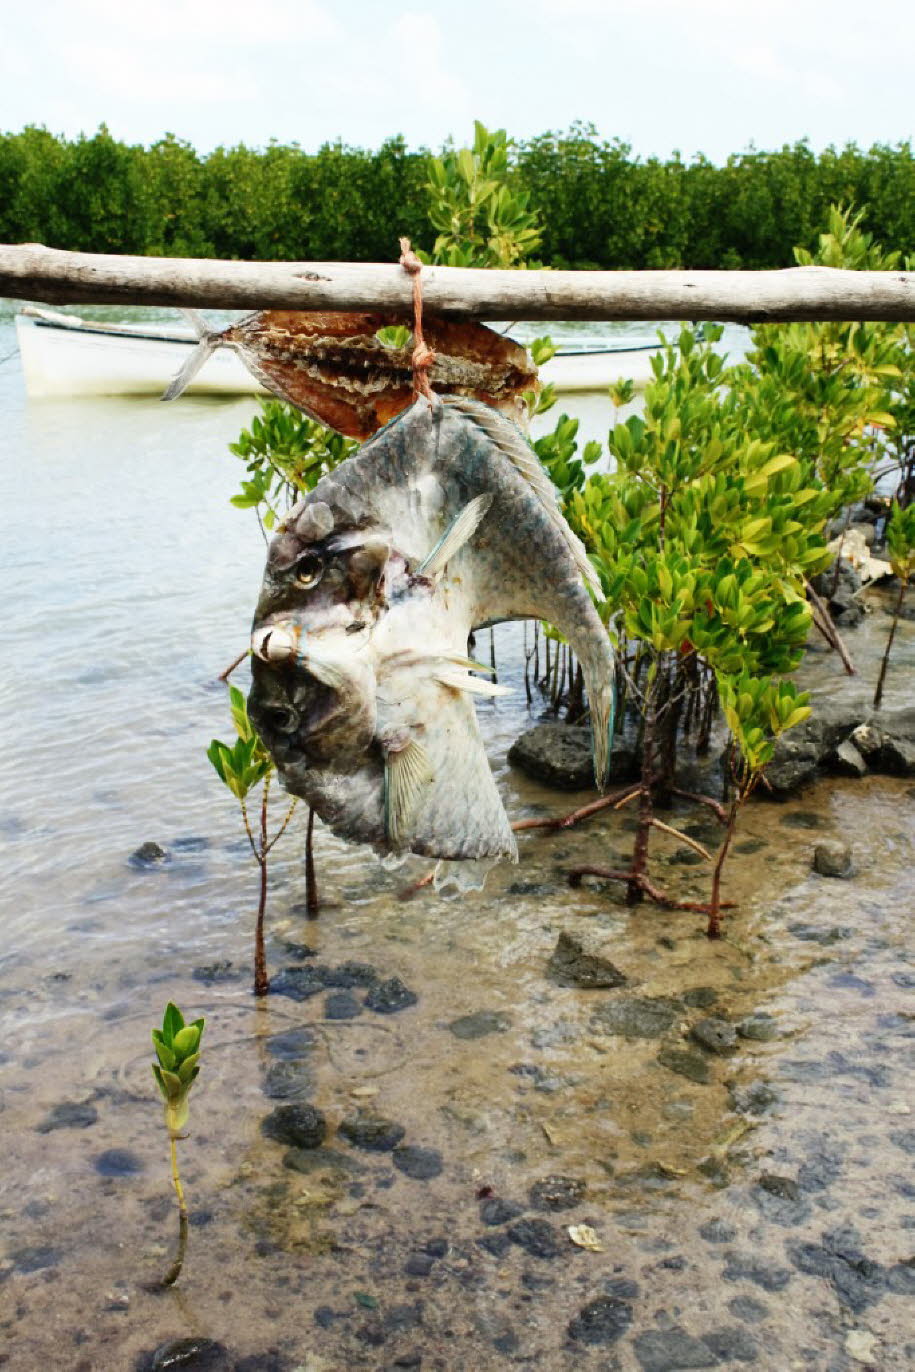 Rodriguez Indischer Ozean Fischtrocknung